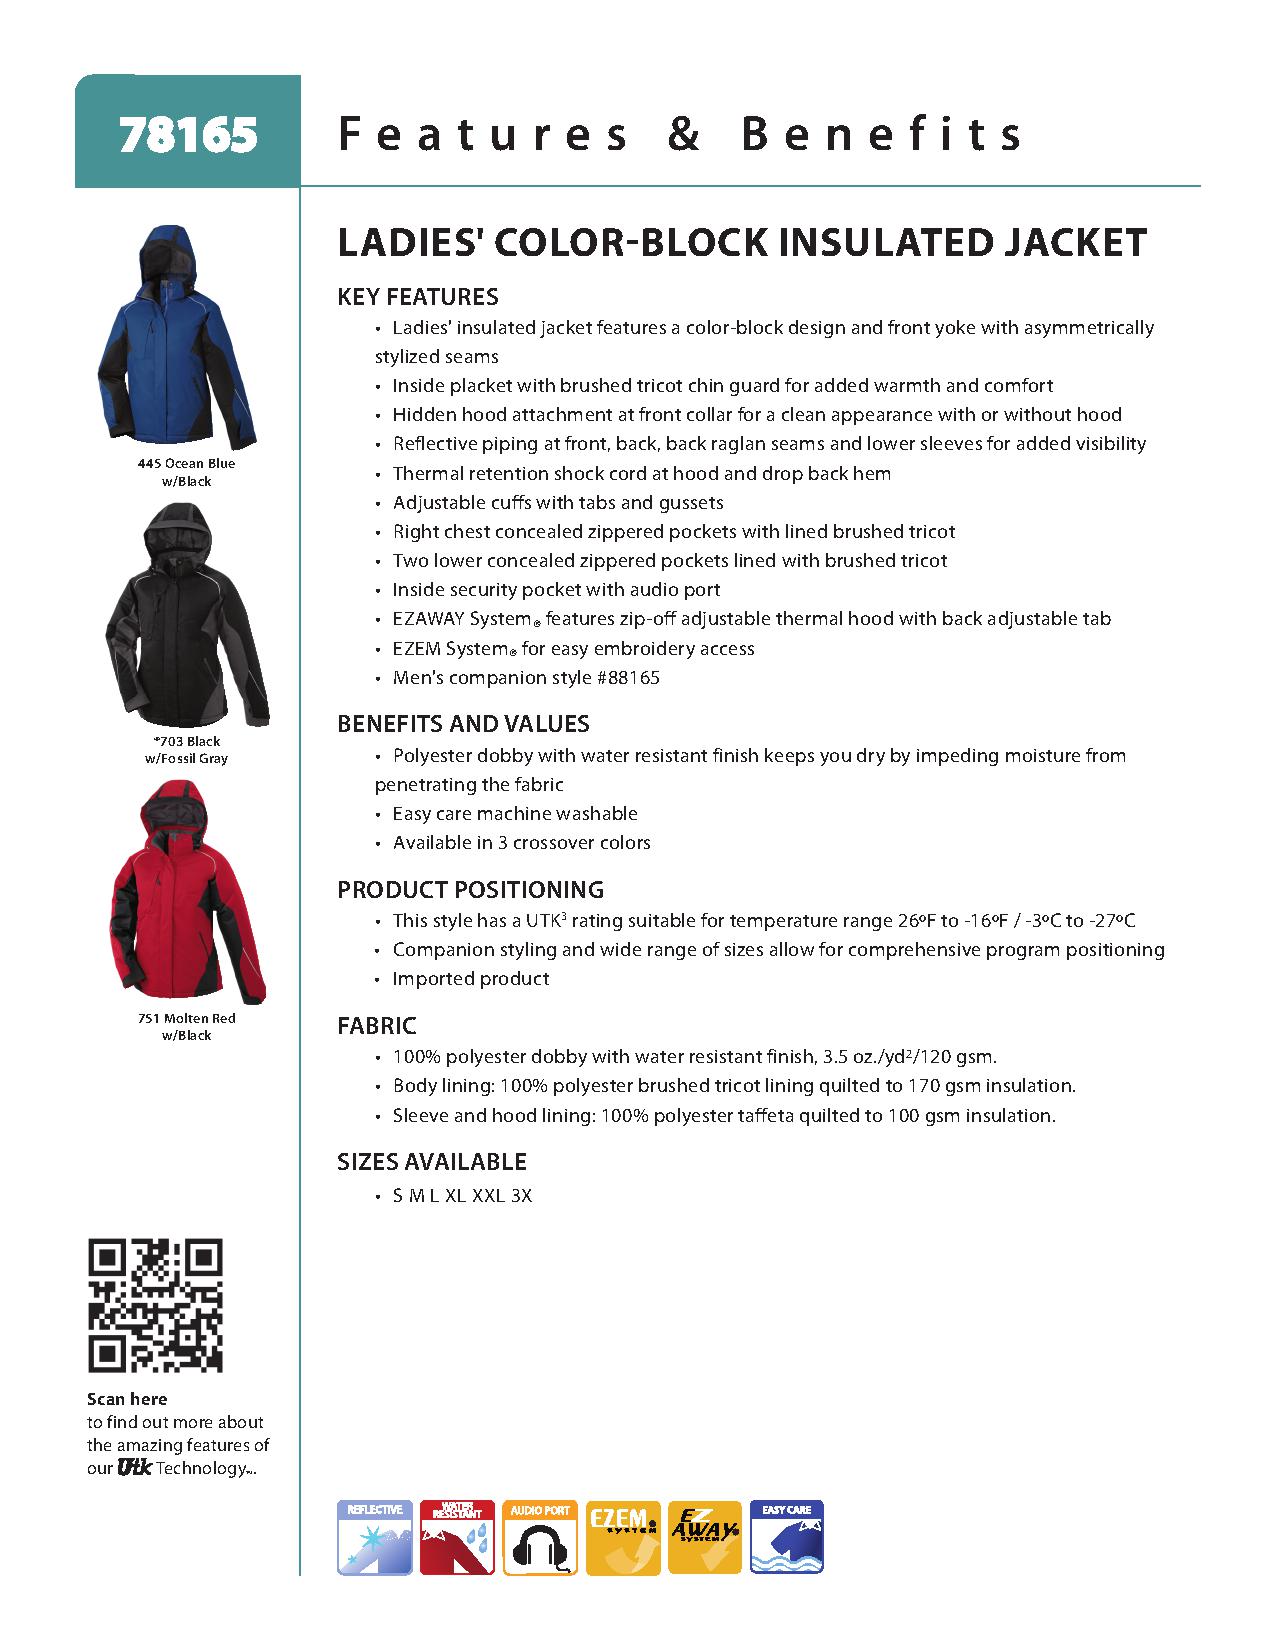 Ash City UTK 3 Warm.Logik 78165 - Avalanche Ladies' Color-Block Insulated Jacket